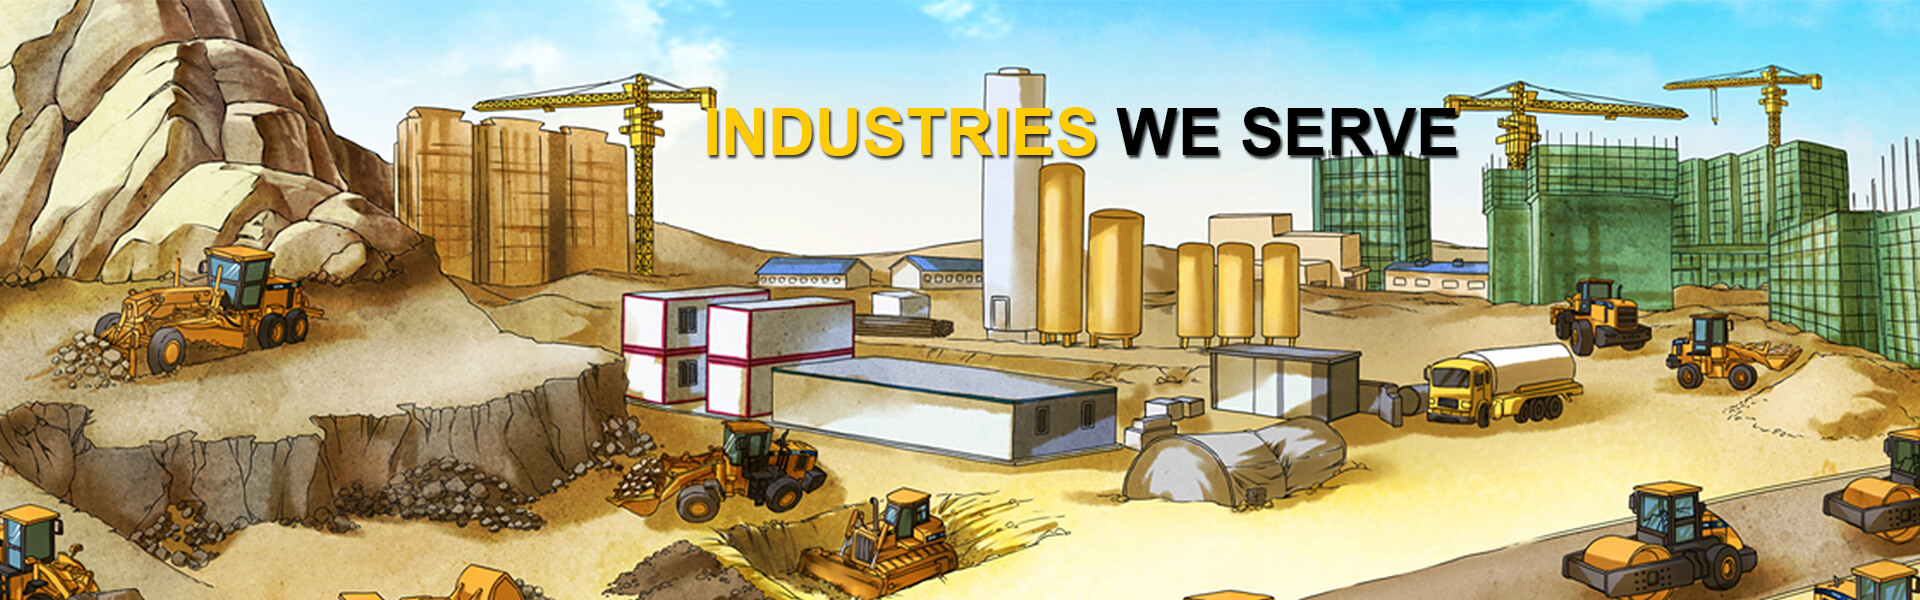 Industries we serve